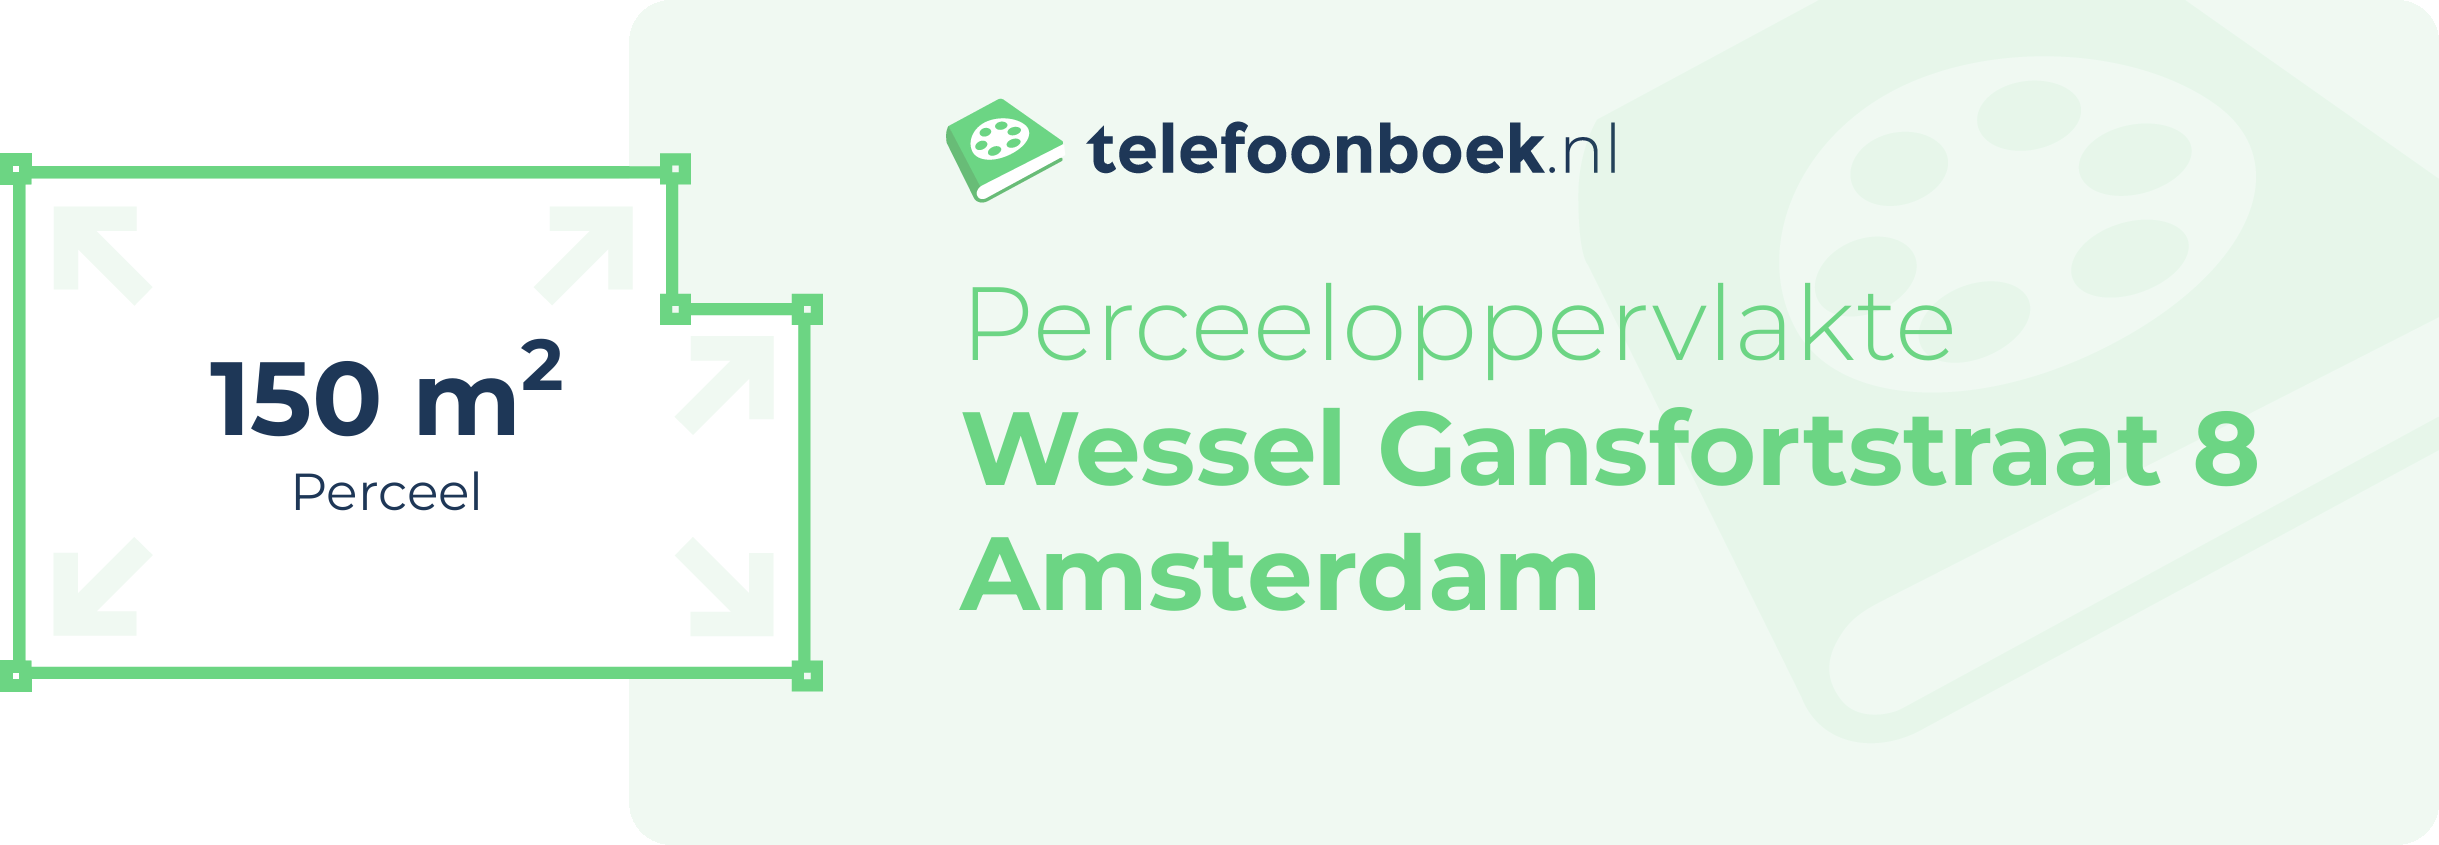 Perceeloppervlakte Wessel Gansfortstraat 8 Amsterdam